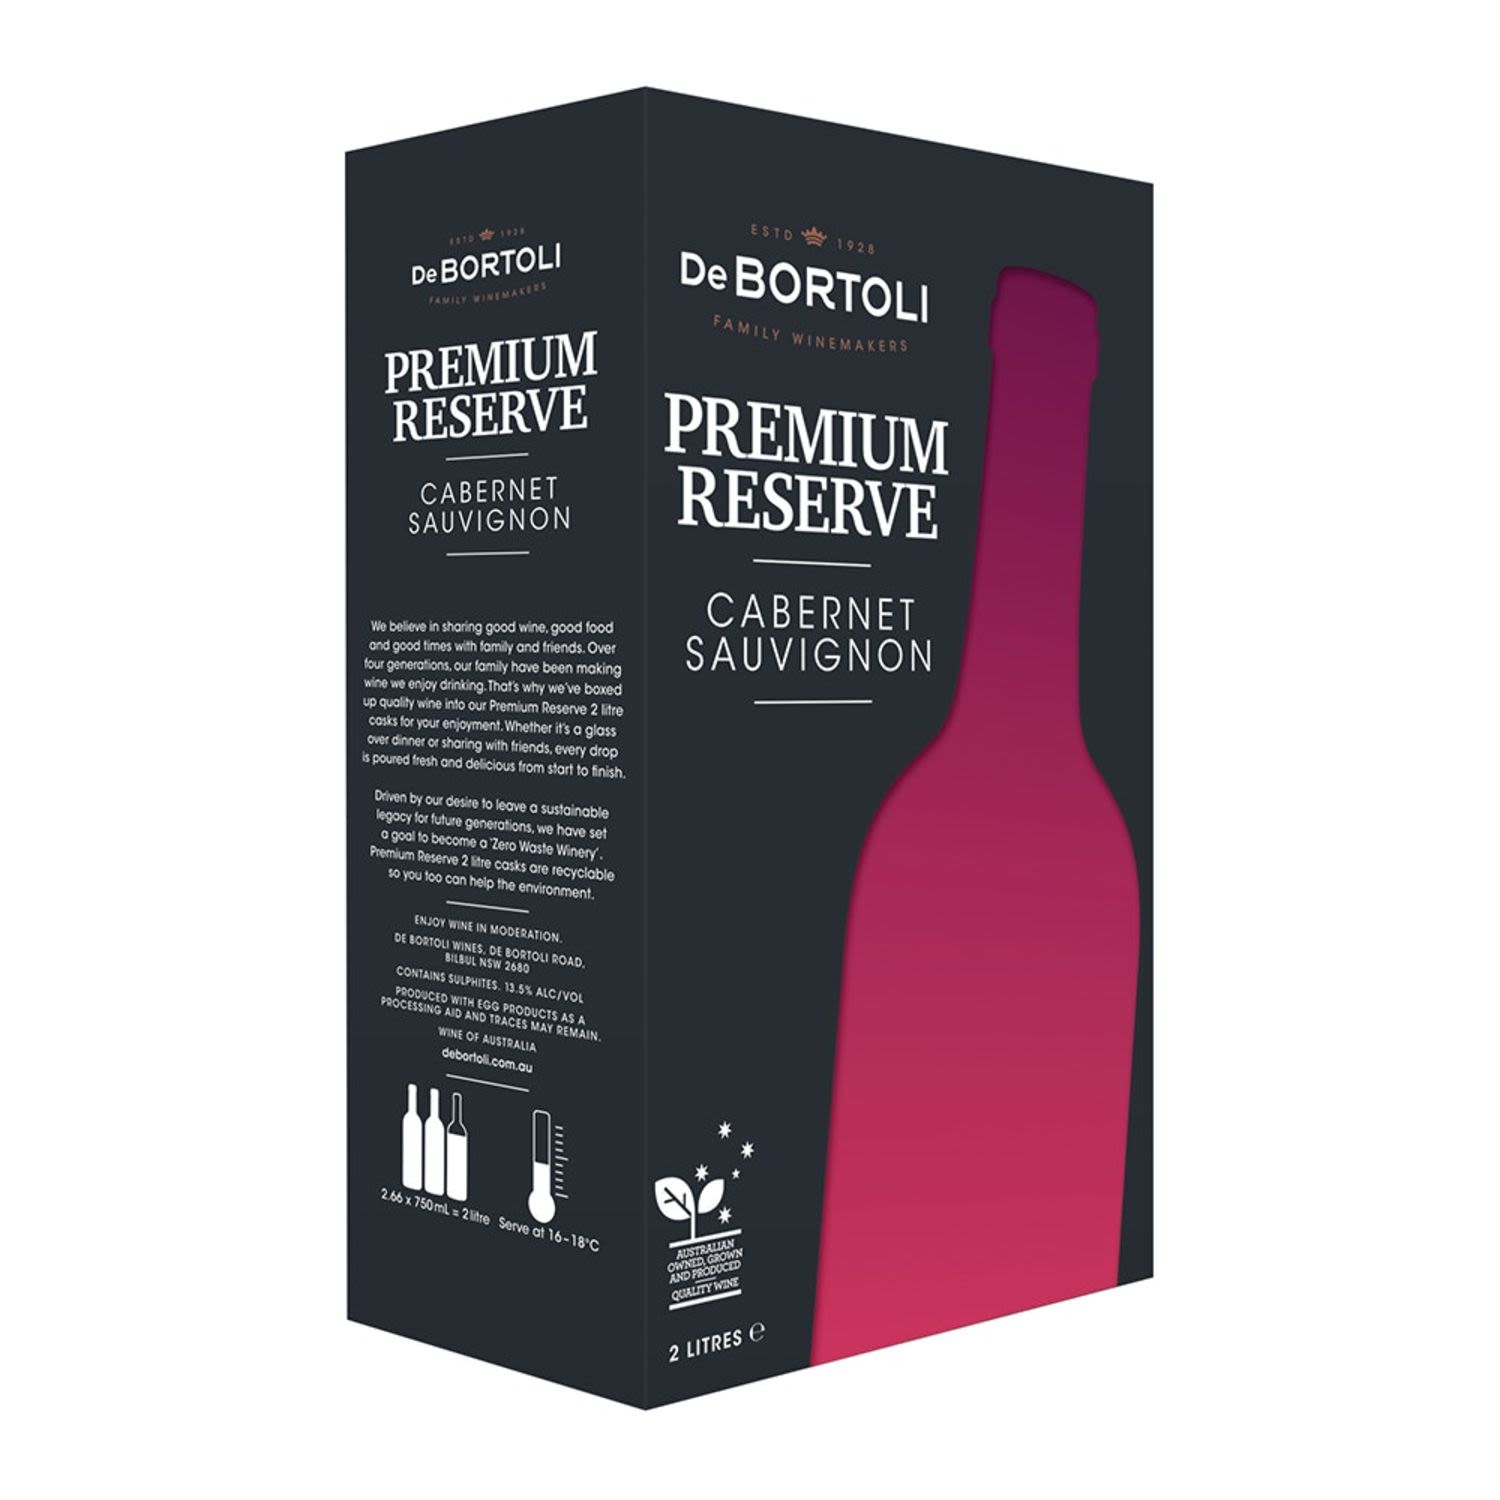 De Bortoli Premium Reserve Cabernet Sauvignon 2L Cask